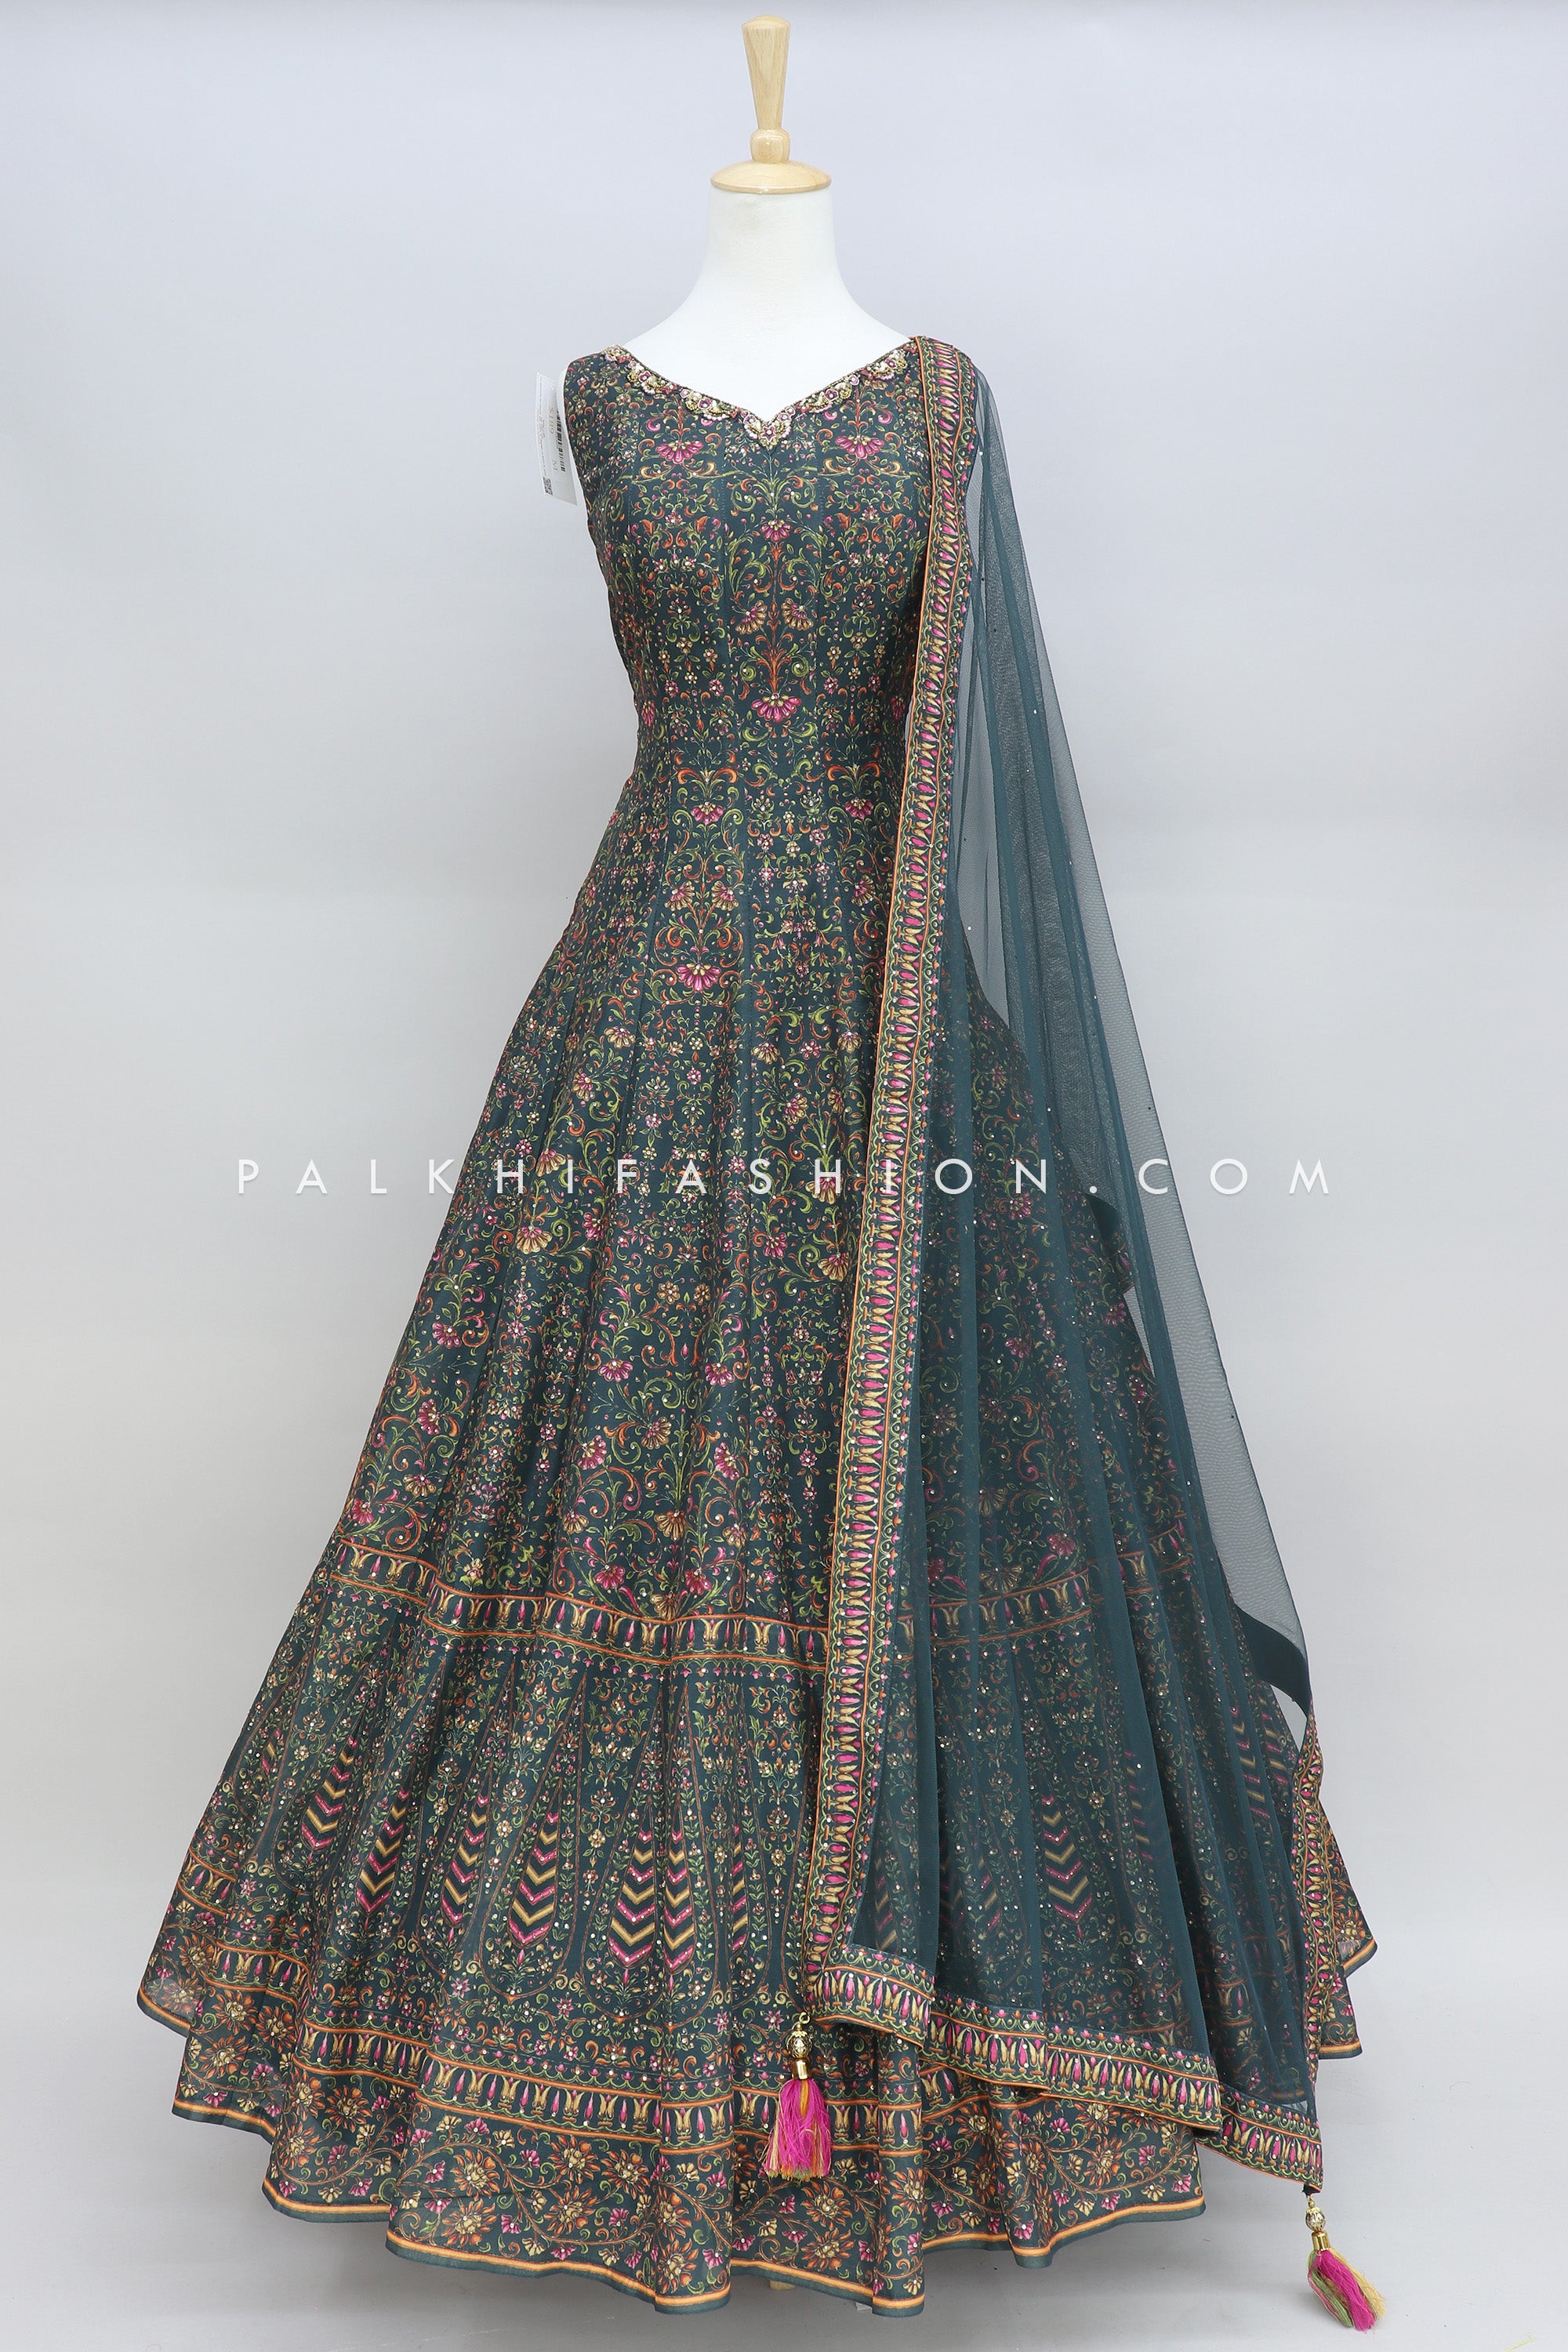 Sophia - Manpreet Toor Clothing Line | Indian wedding dress modern, Modern  indian wedding, Indian wedding dress